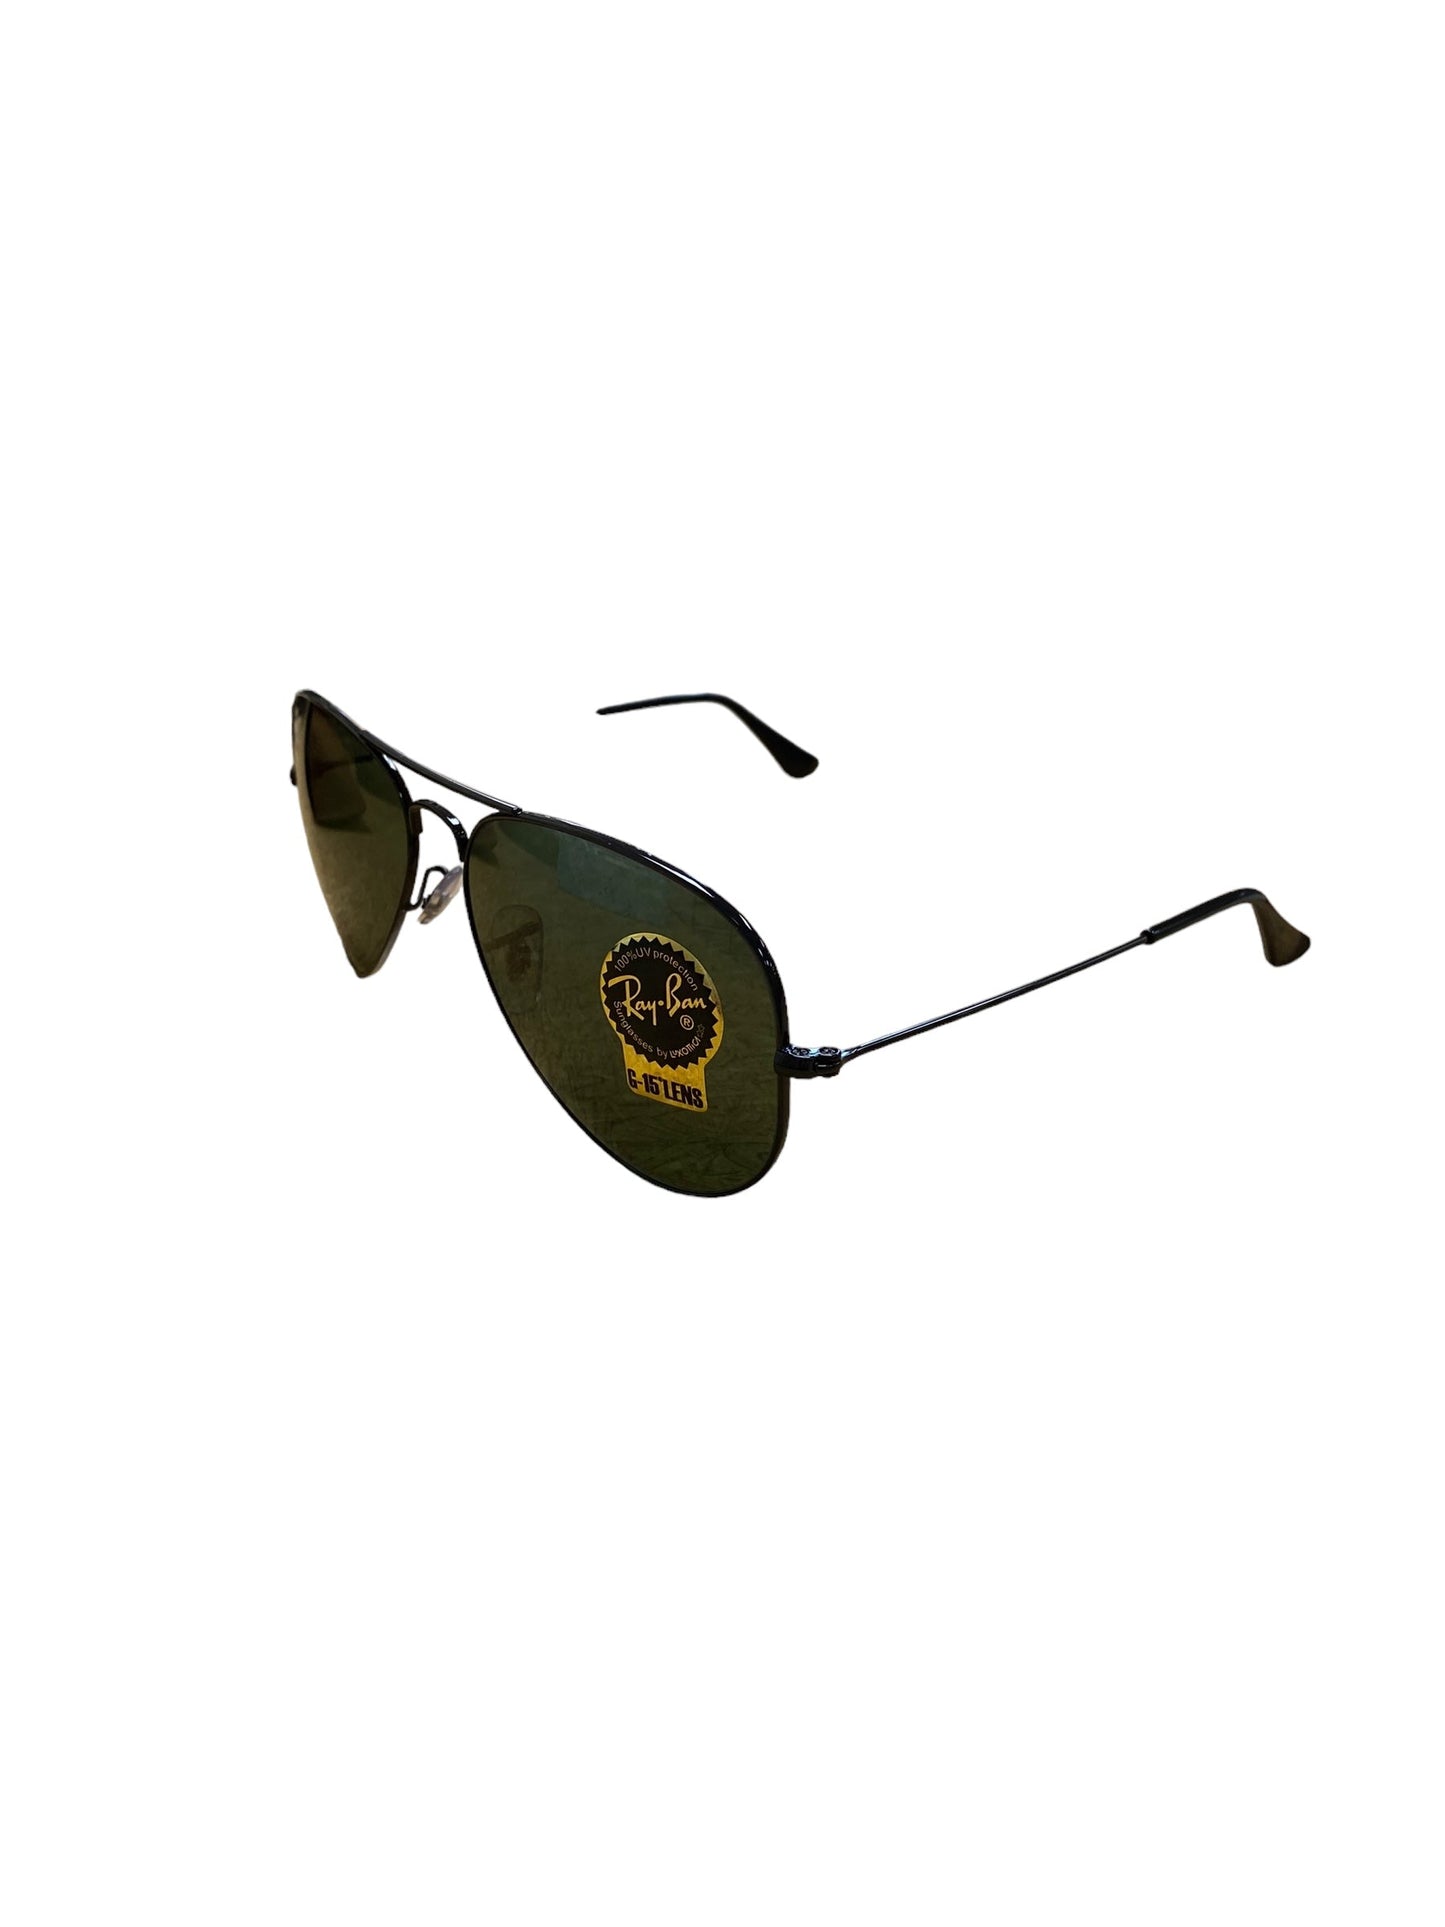 Sunglasses Ray Ban